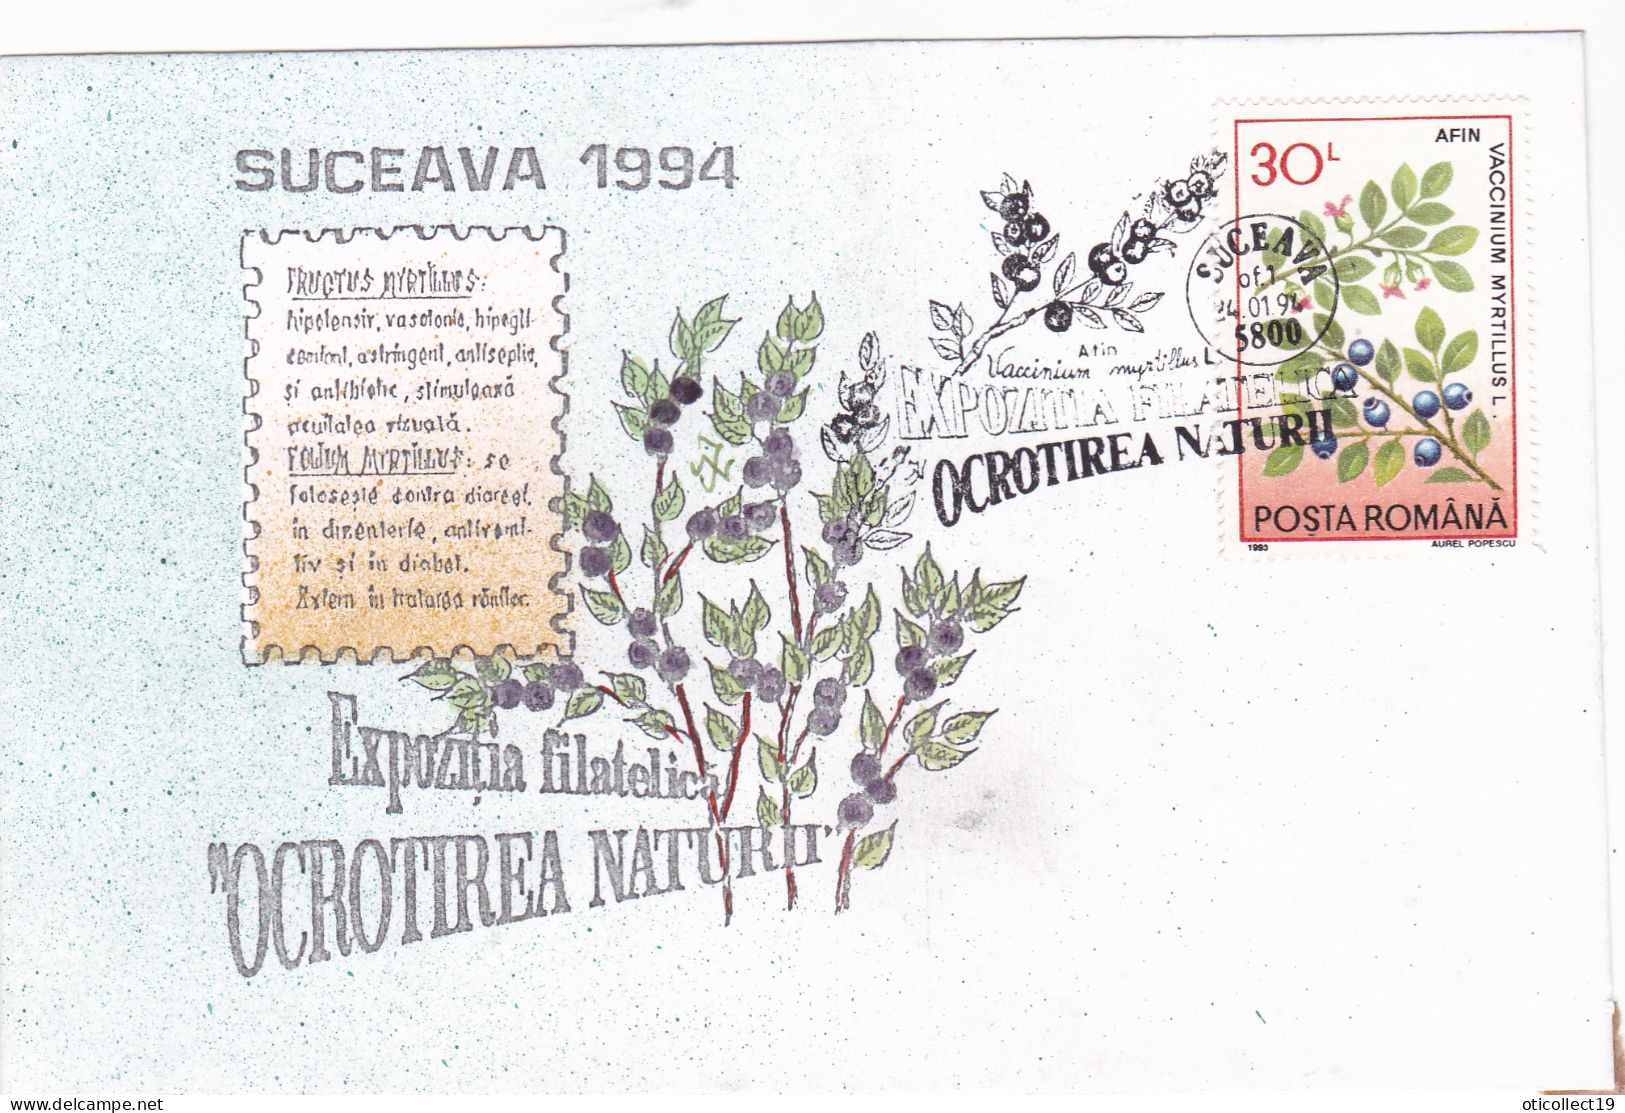 MEDICINAL PLANTS COVERS 1994 ROUMANIE FLOWERS-PHILATELIC EXHIBITION 'NATURE PROTECTION SUCEAVA - Plantes Médicinales